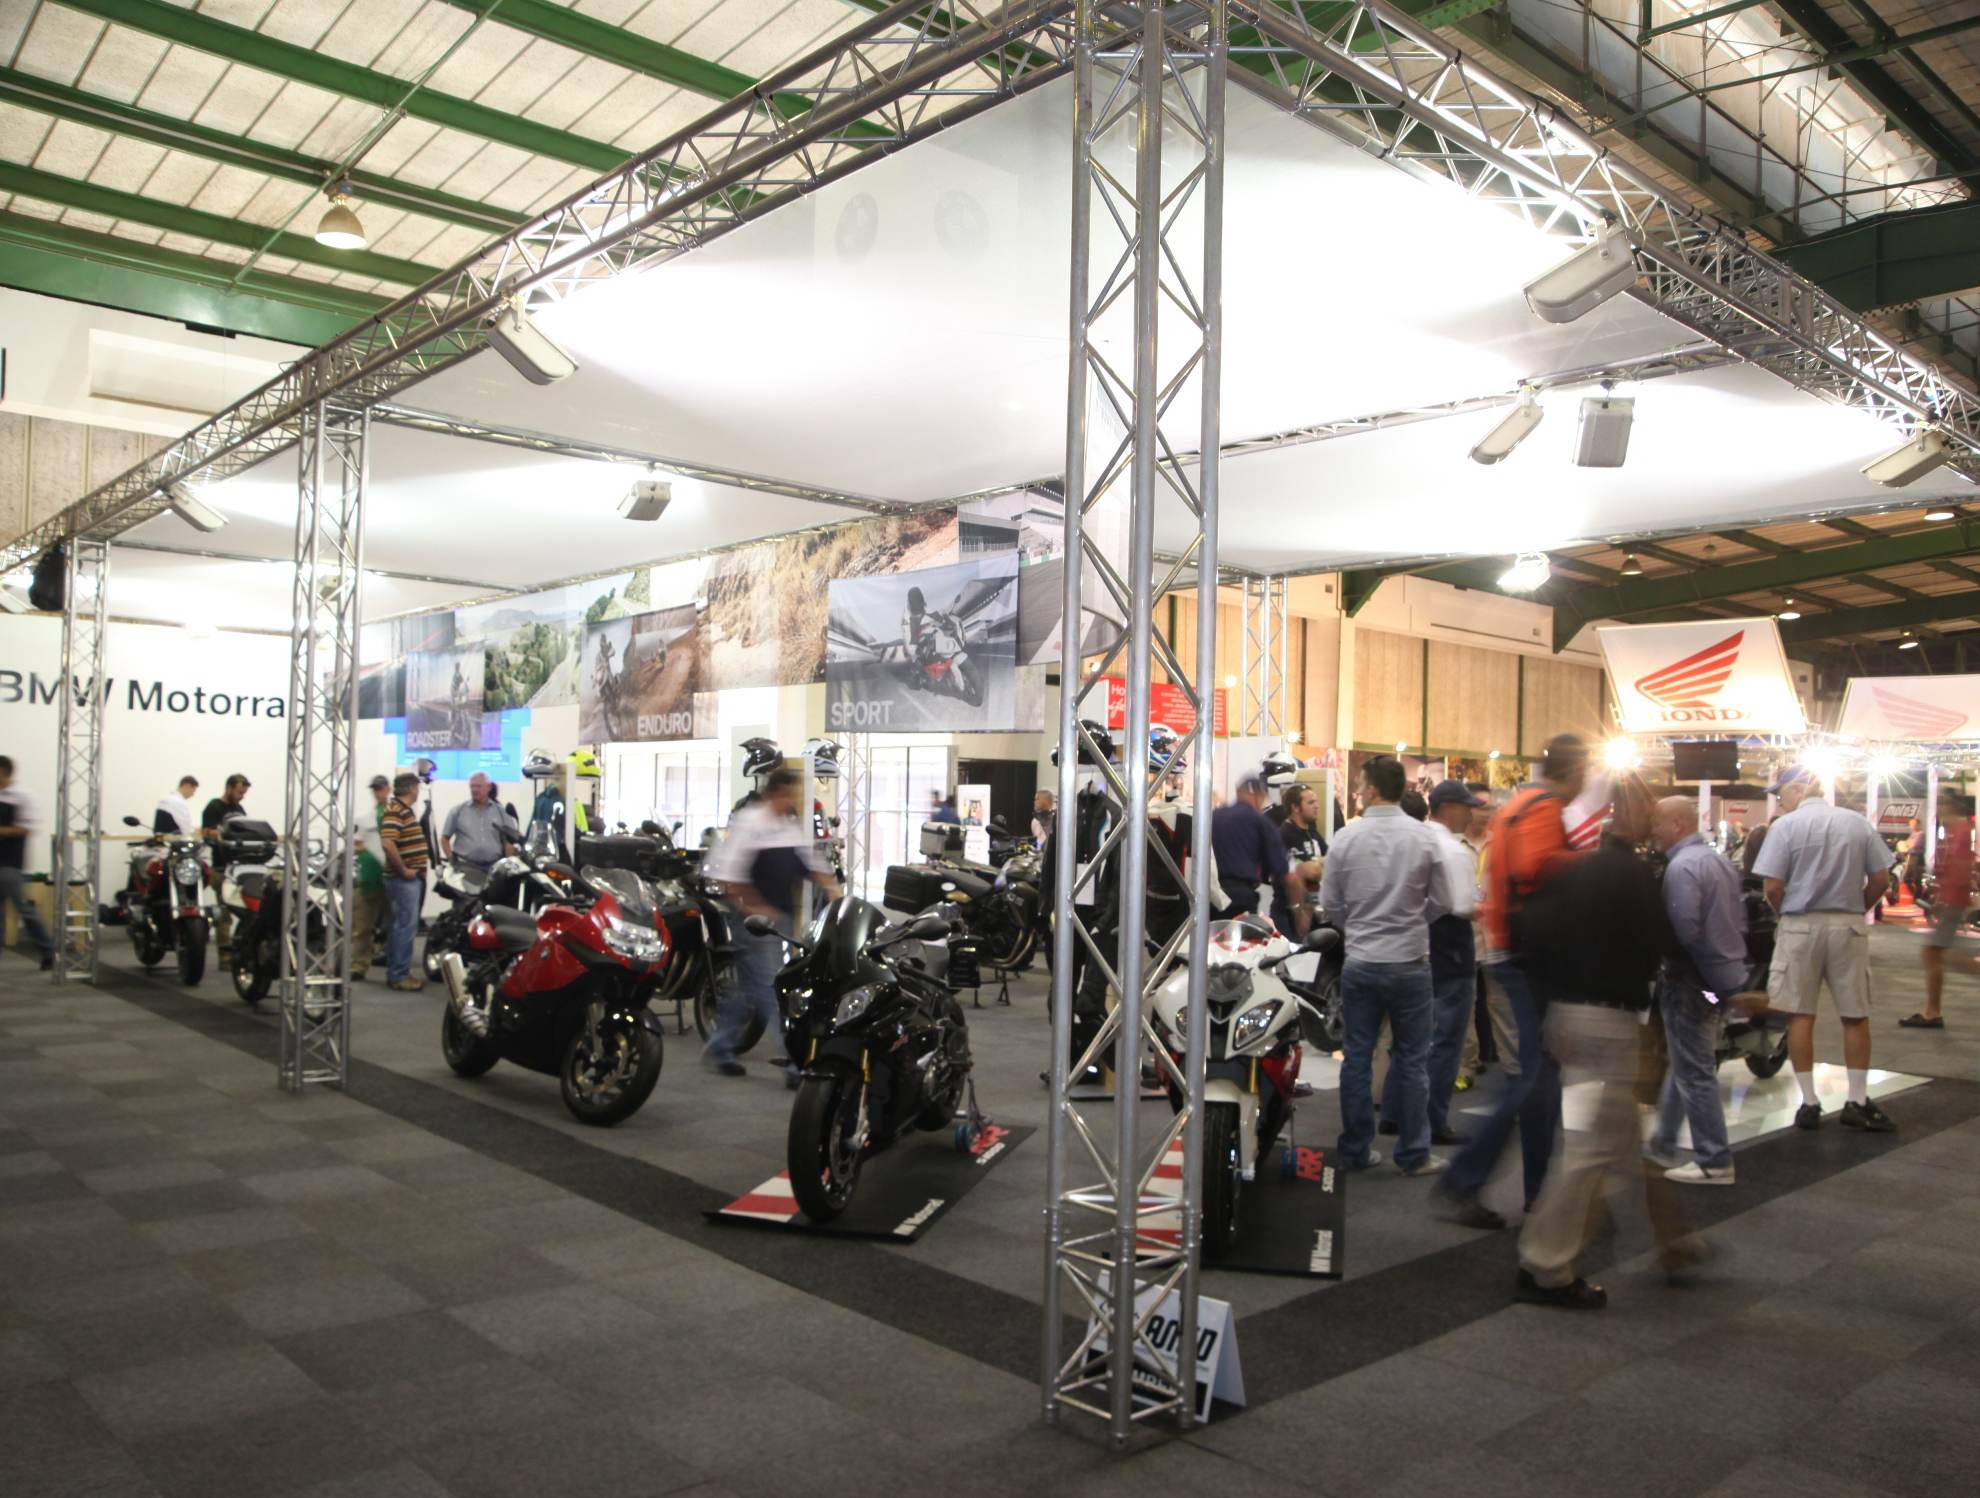 AMid Motorcycle Show 2013 – Big Presence for BMW Motorrad